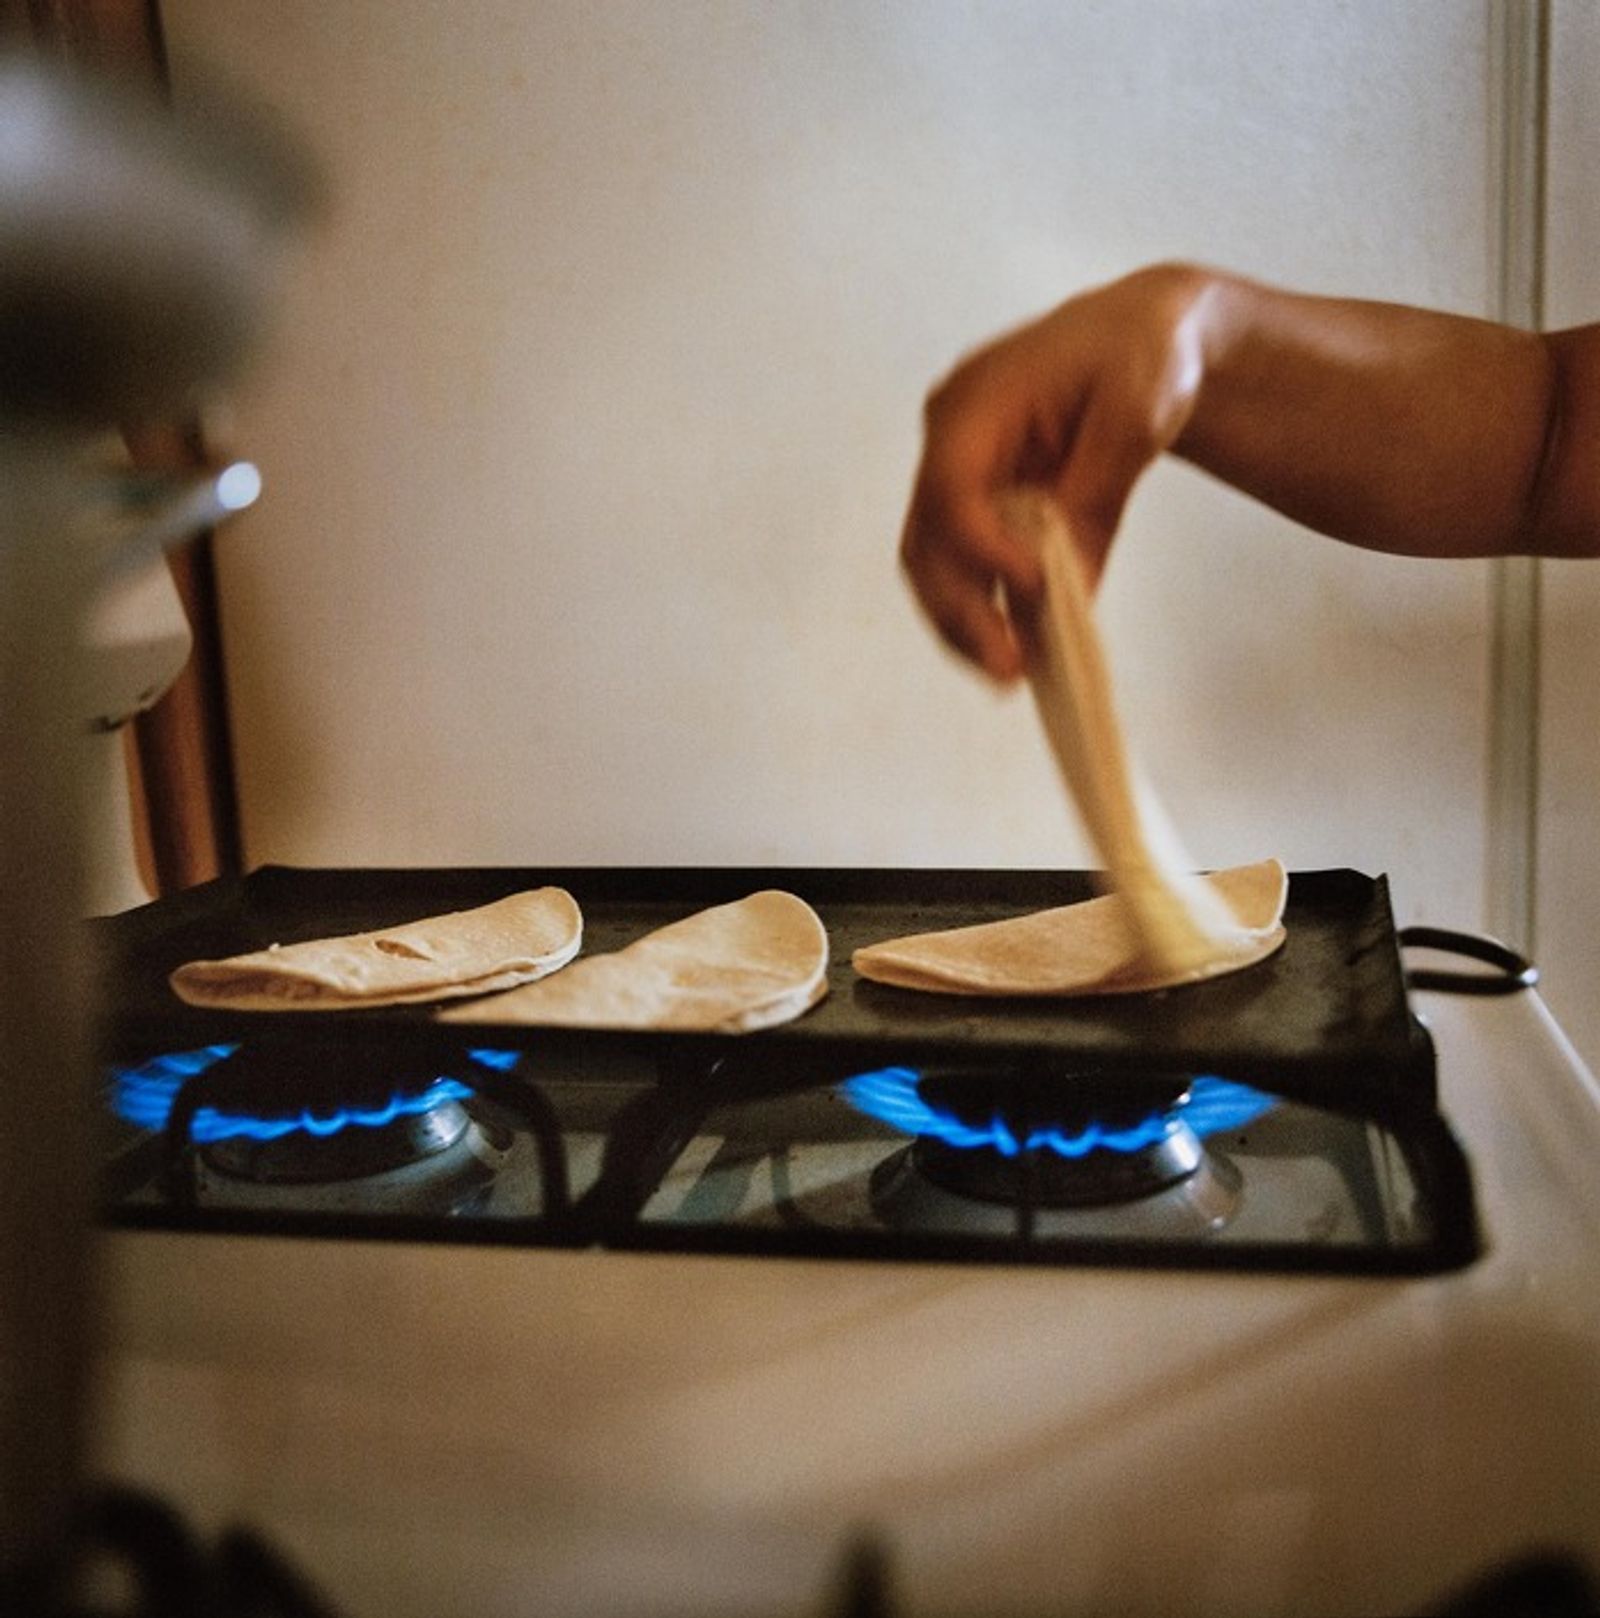 © Ruth Prieto - Juanita prepares some quesadillas for lunch.